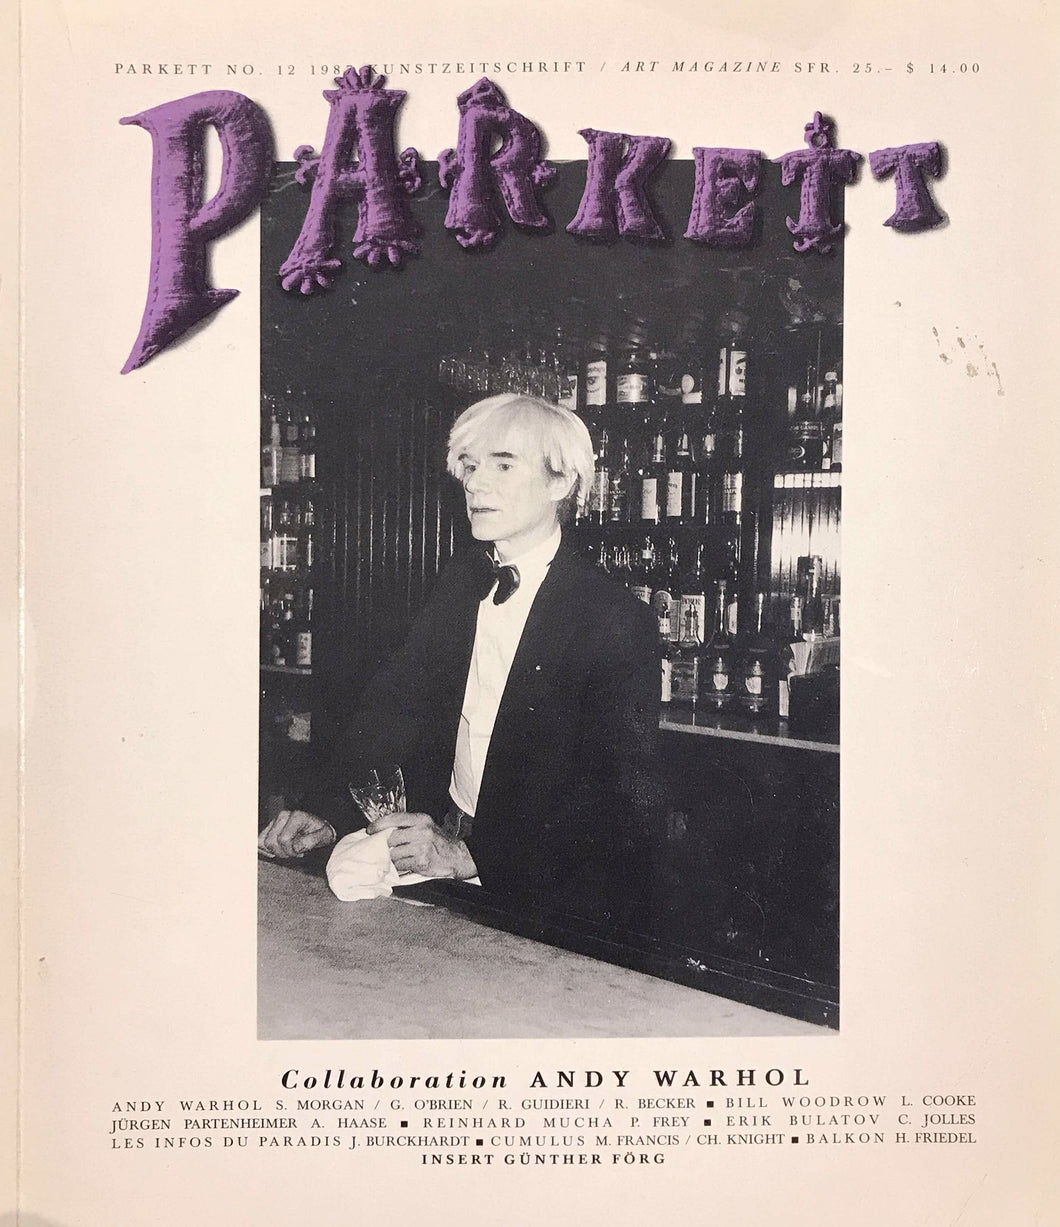 Parkett No. 12: Andy Warhol (1987)